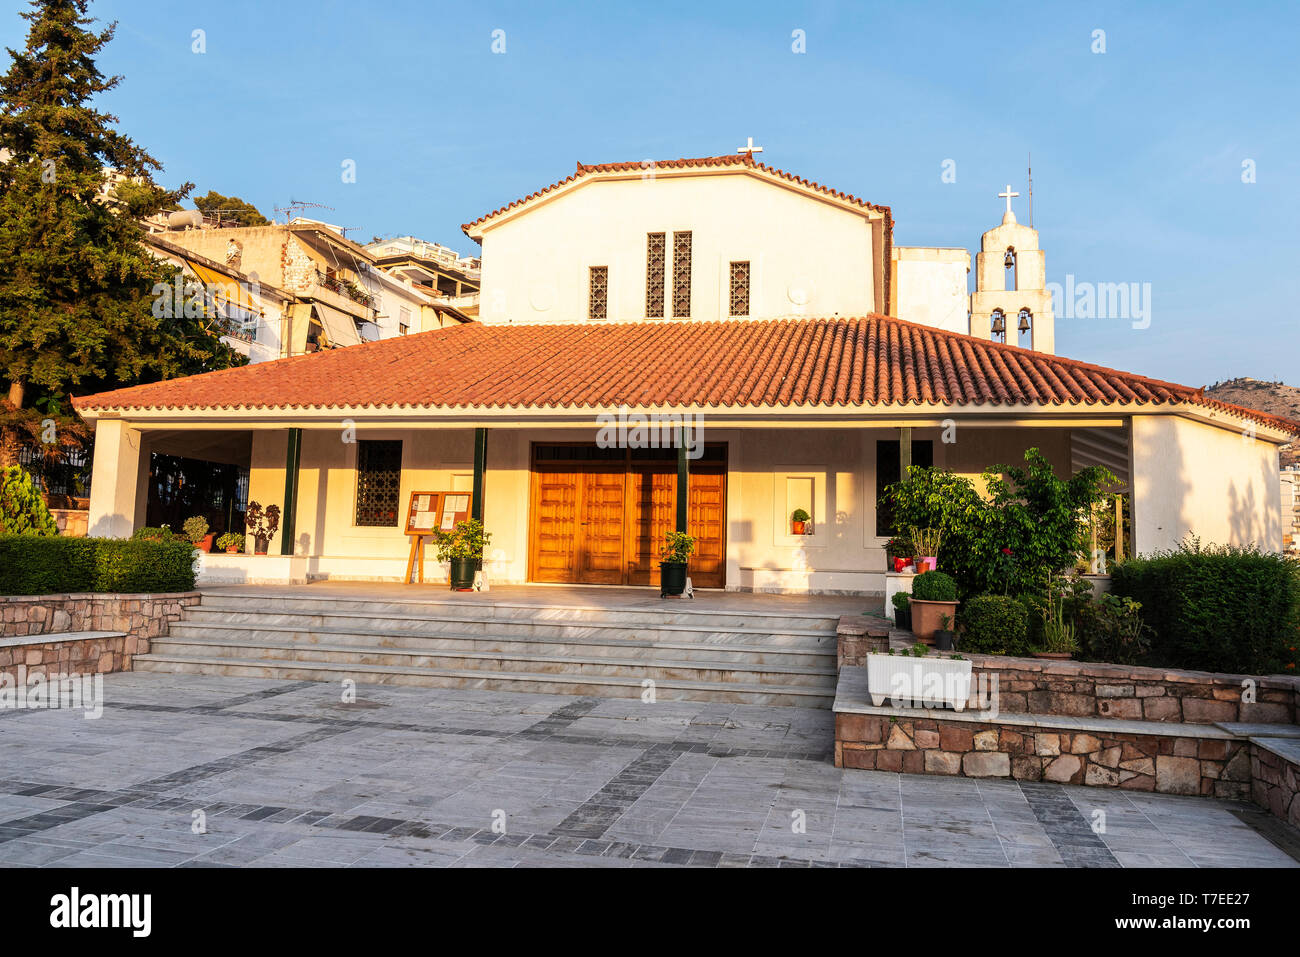 Chiesa ortodossa, chiesa, Saranda, Mar Ionio, Albania Foto Stock